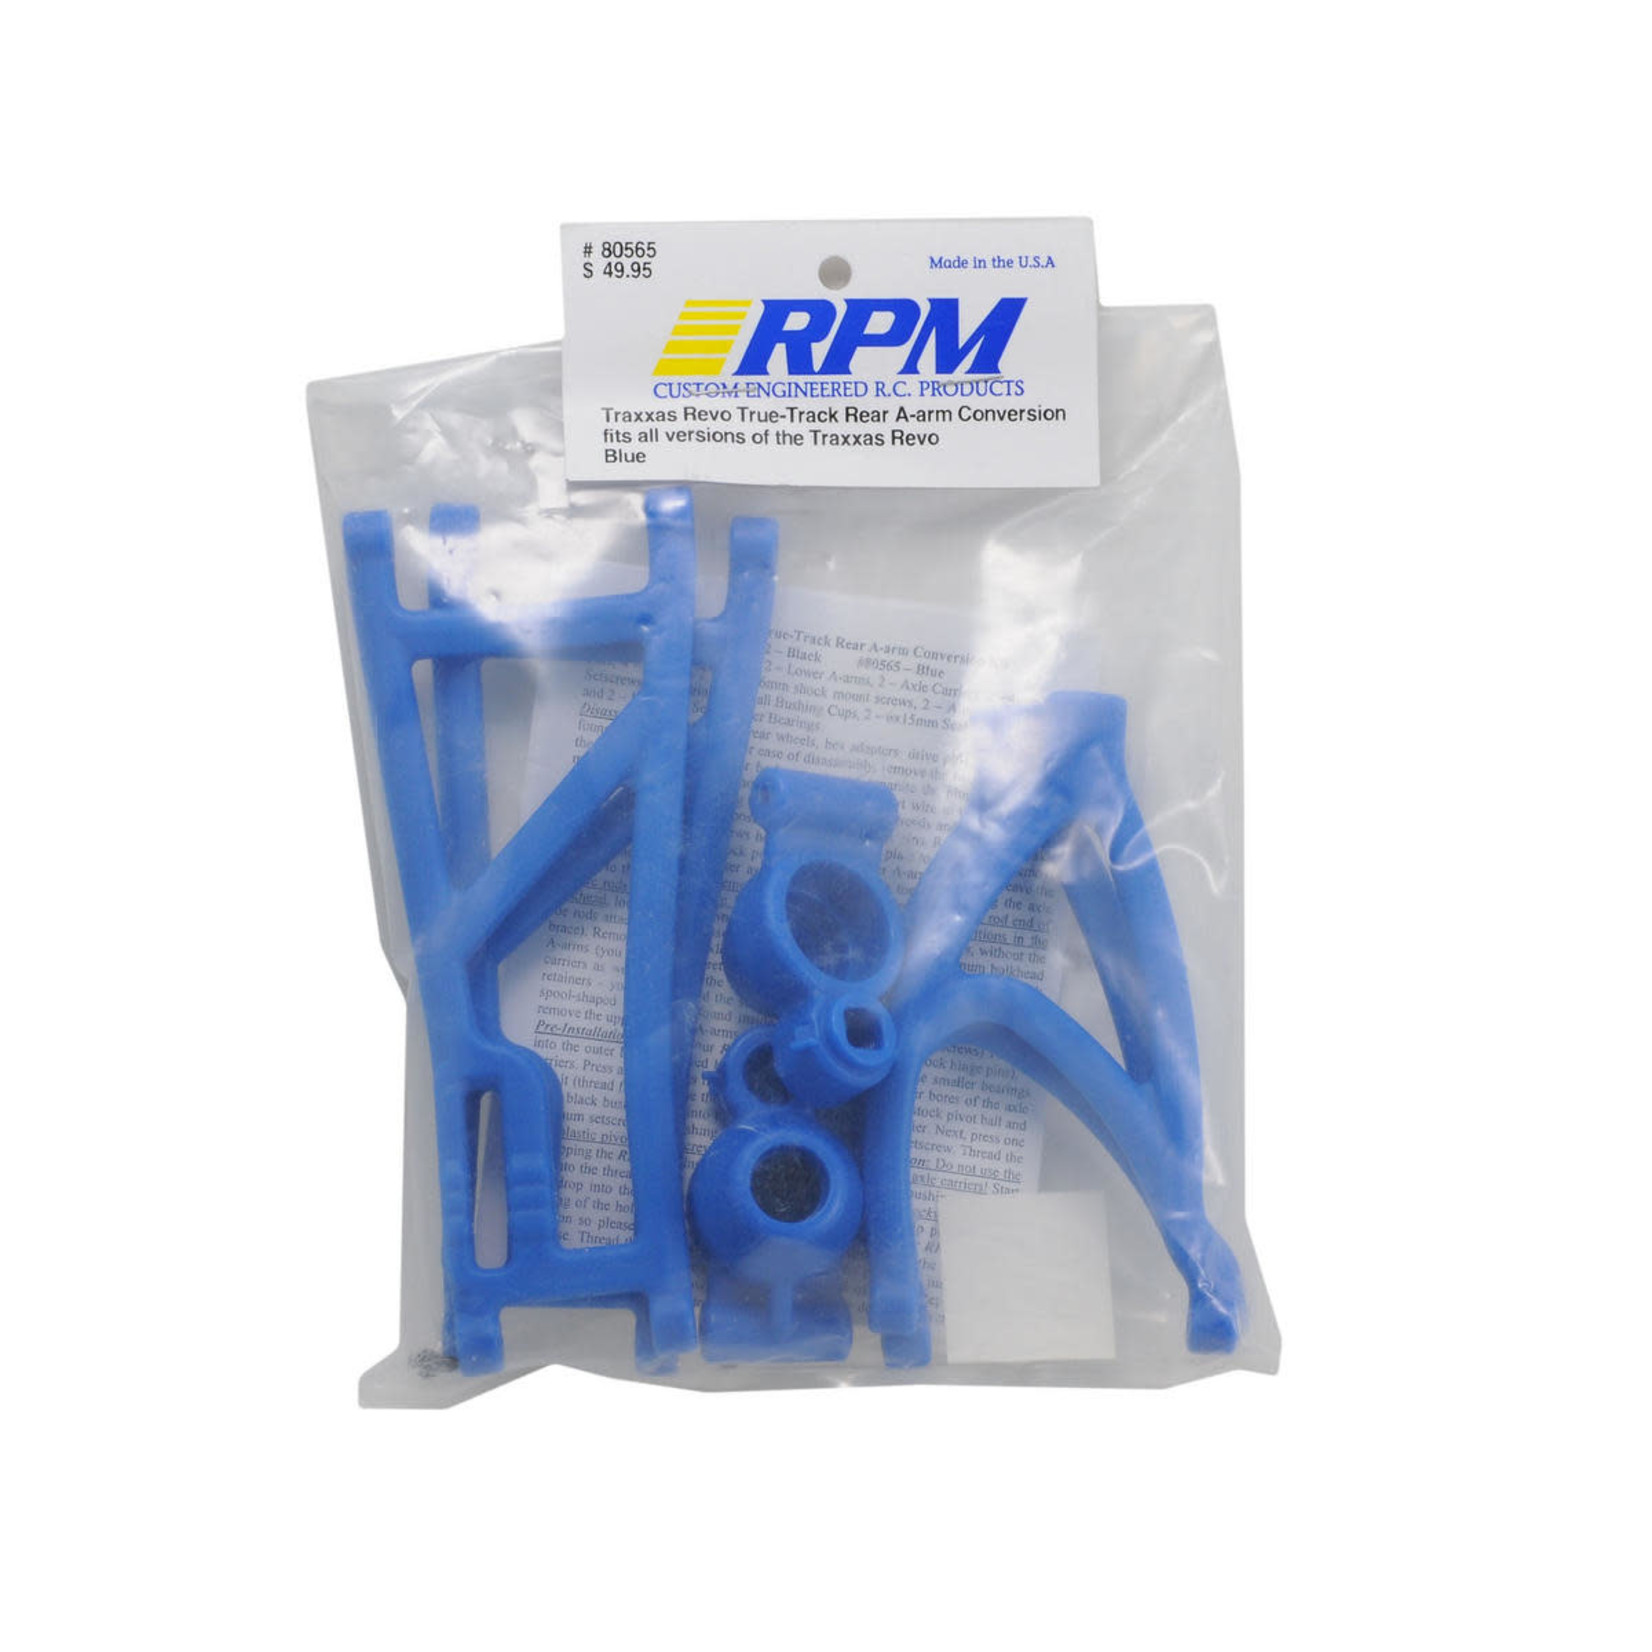 RPM RPM Traxxas Revo True-Track Rear A-Arm Conversion Kit (Blue) #80565